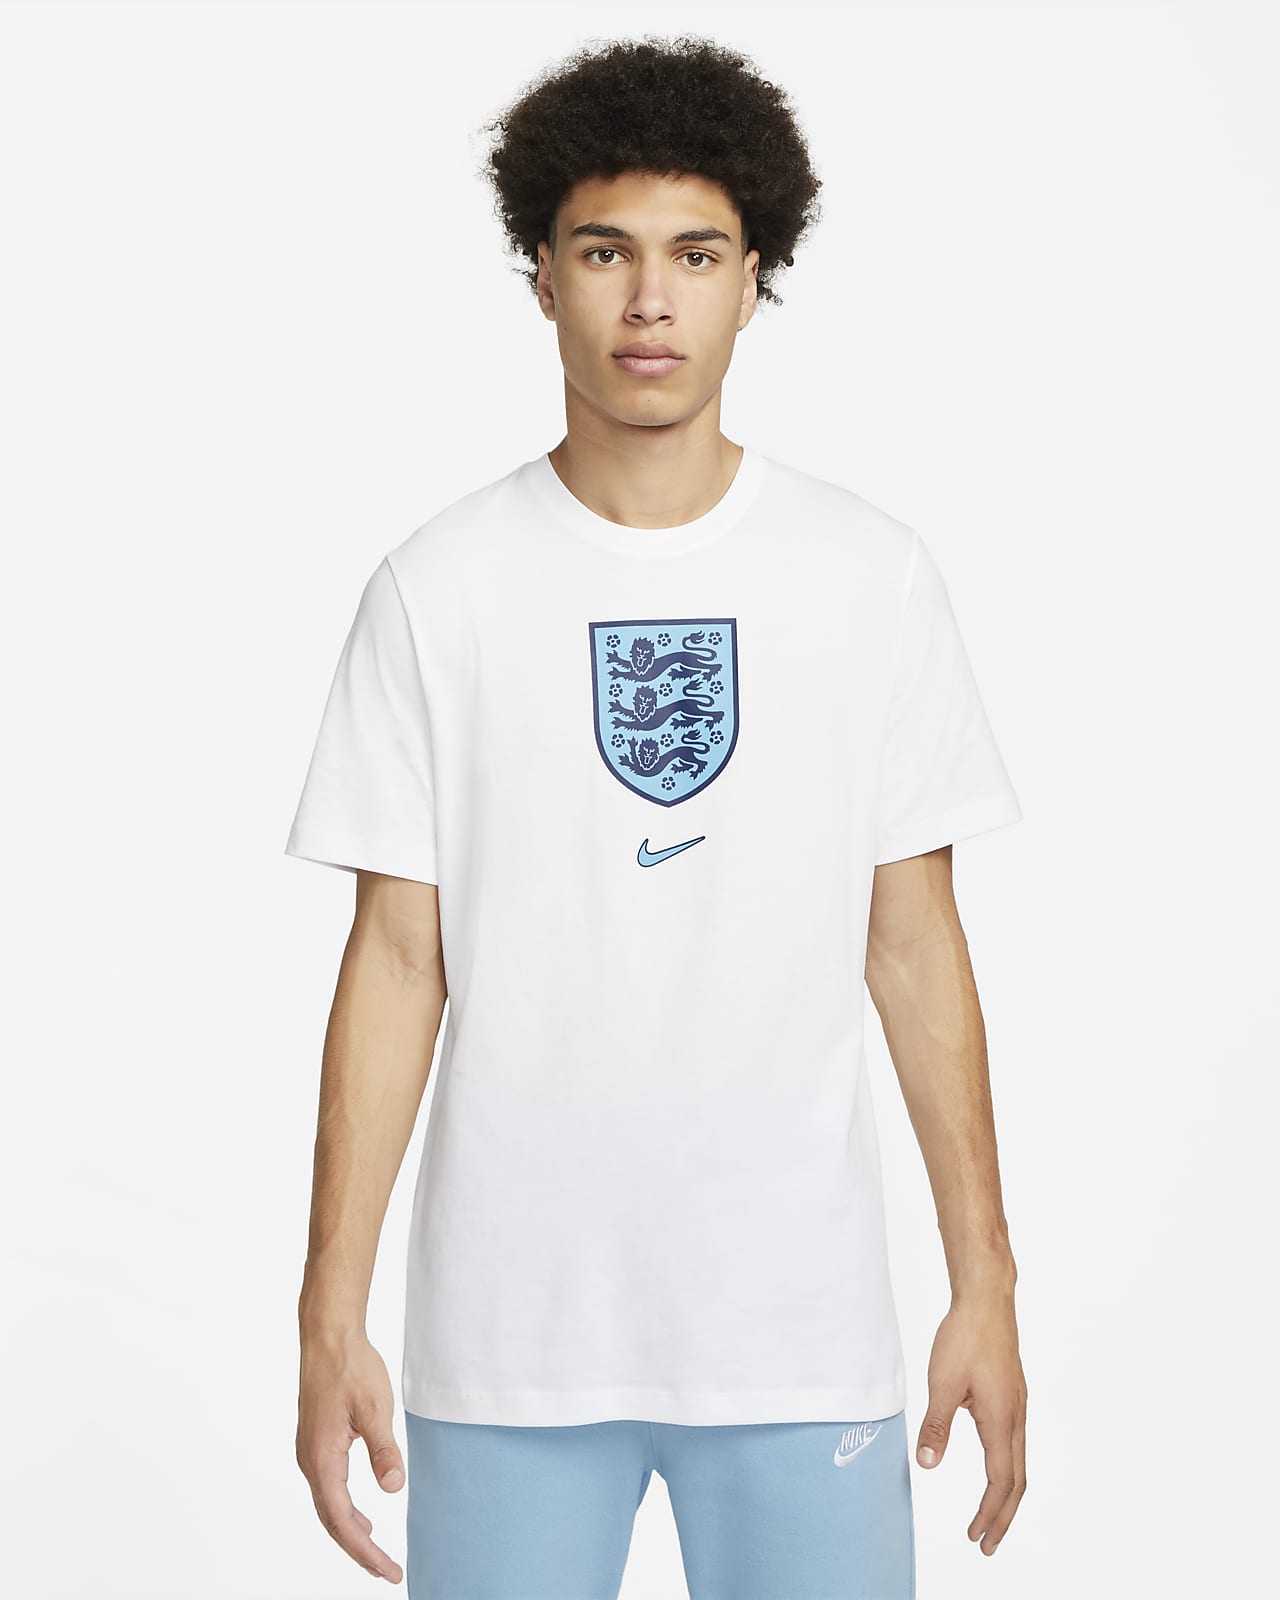 England Men's Nike T-Shirt. Nike ID